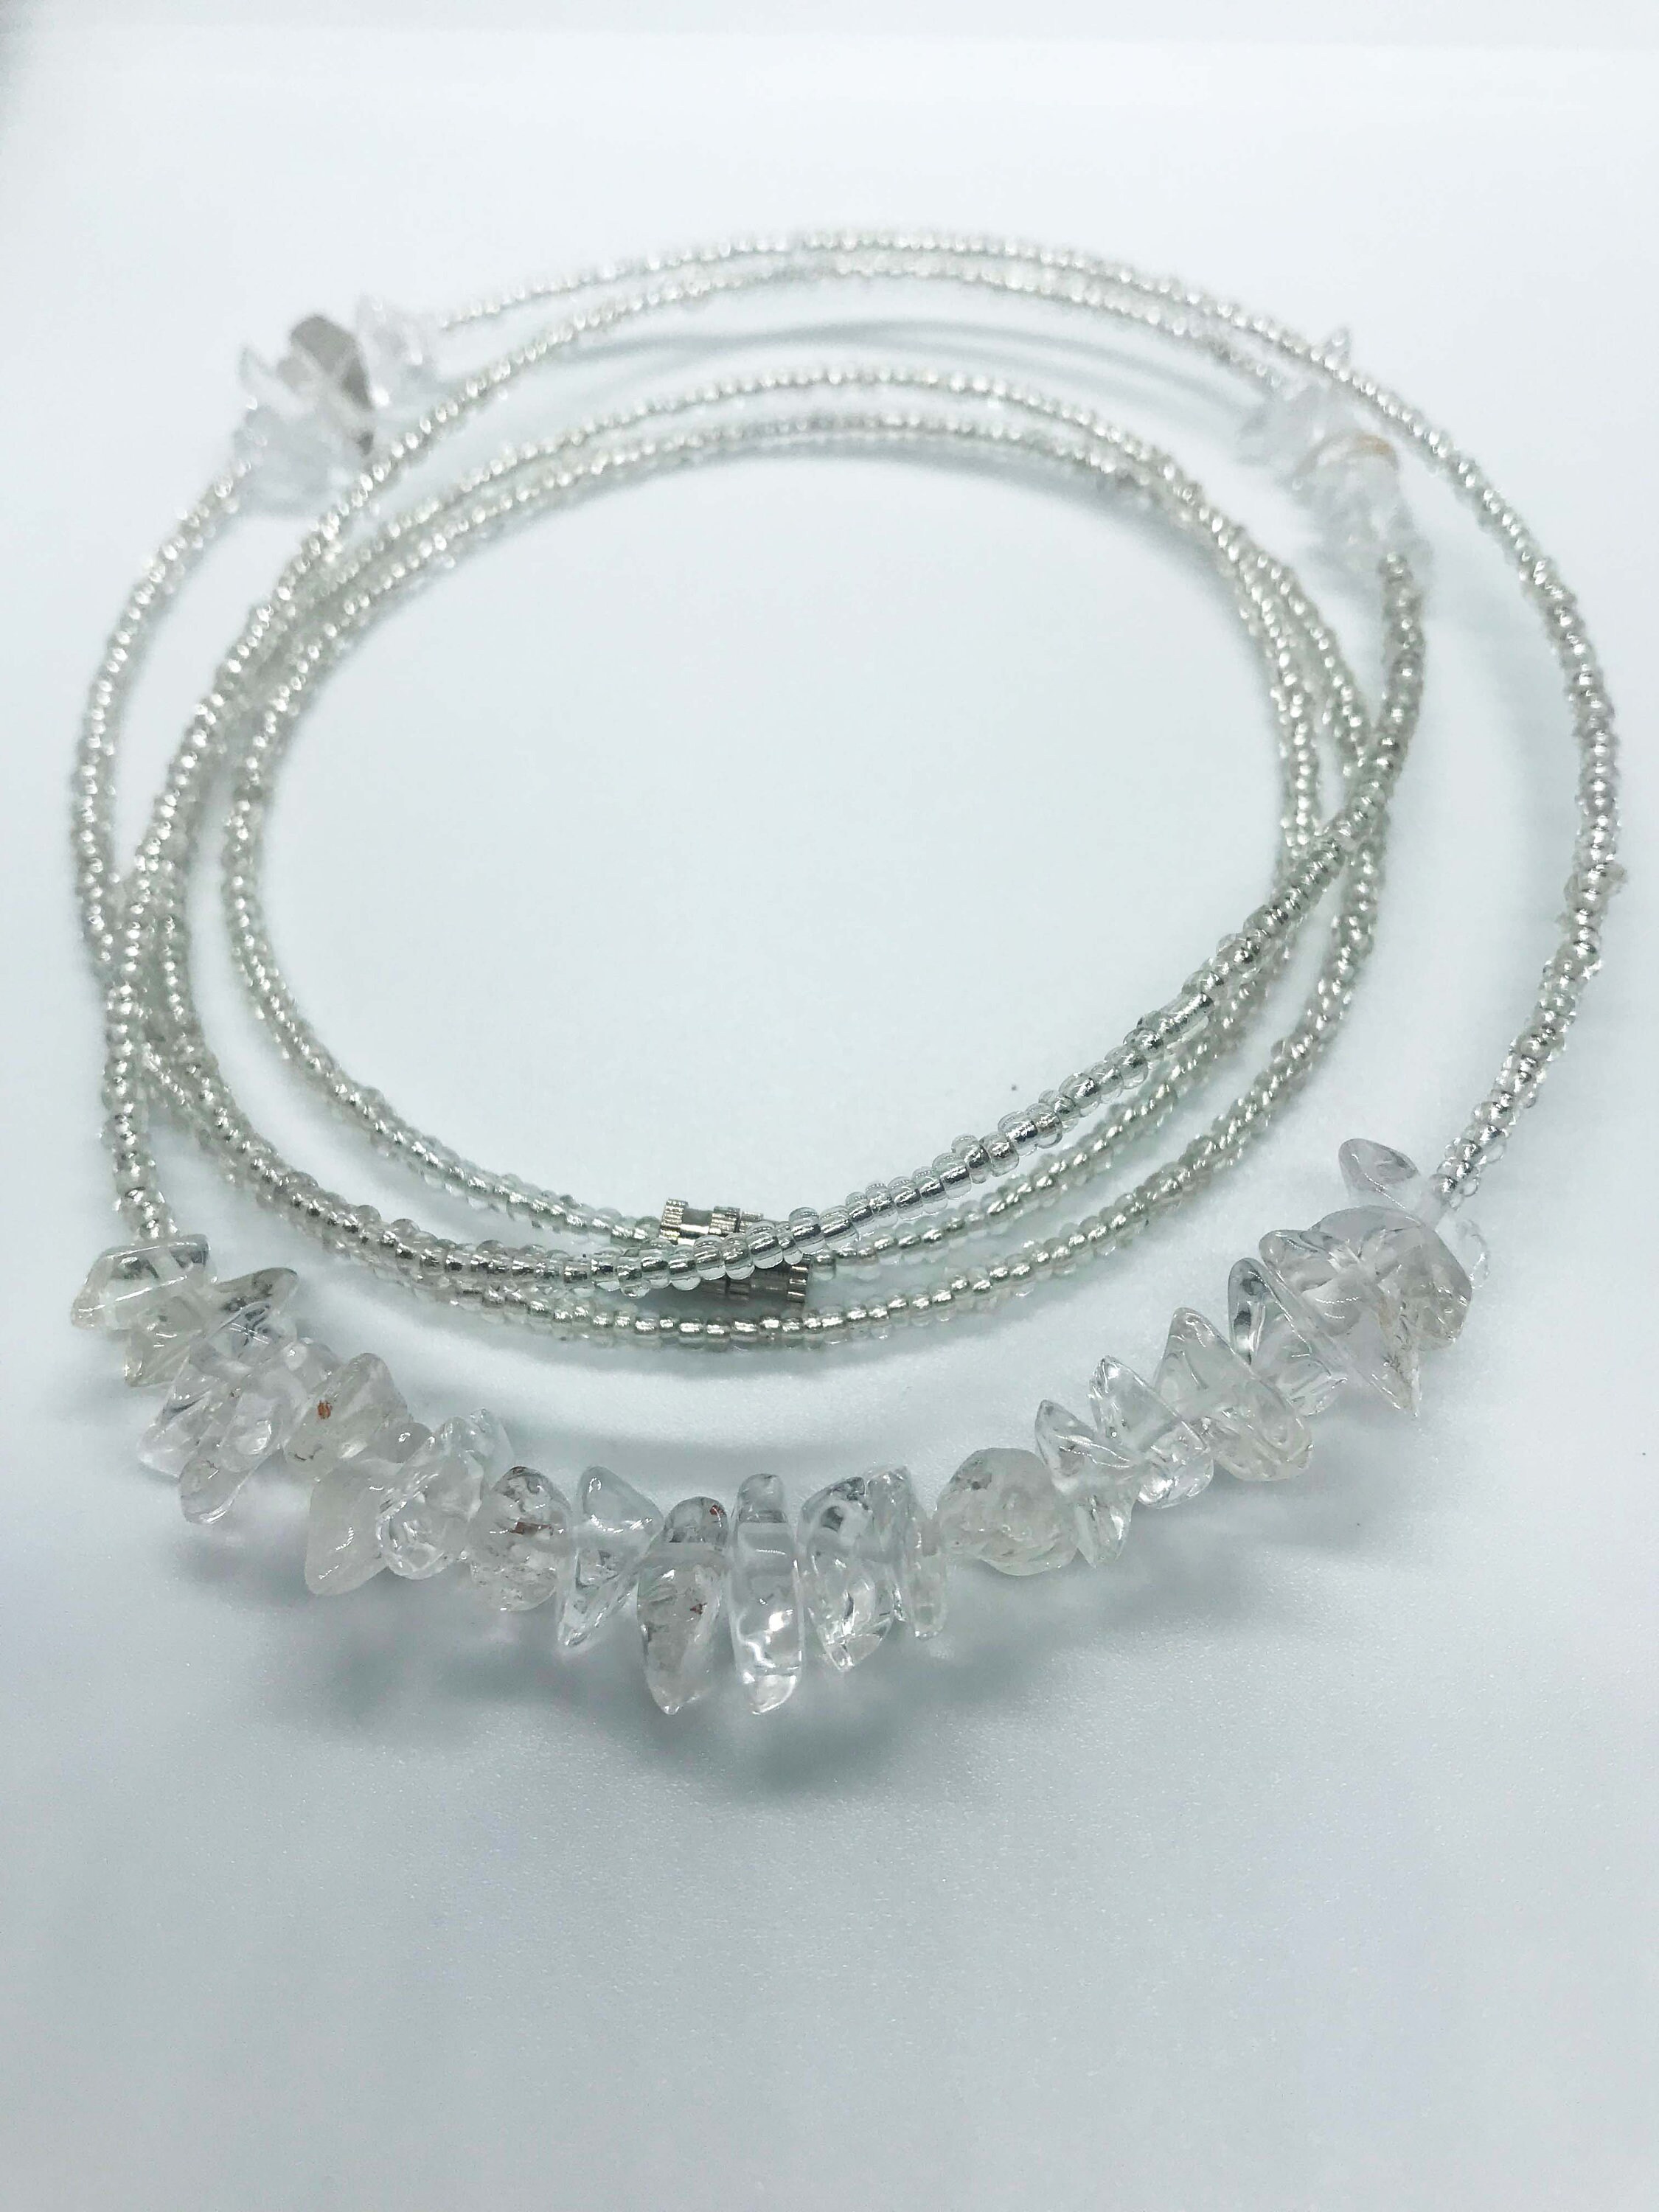 Quartz Crystal Waist Beads Waist Beads Crystal Belly | Etsy